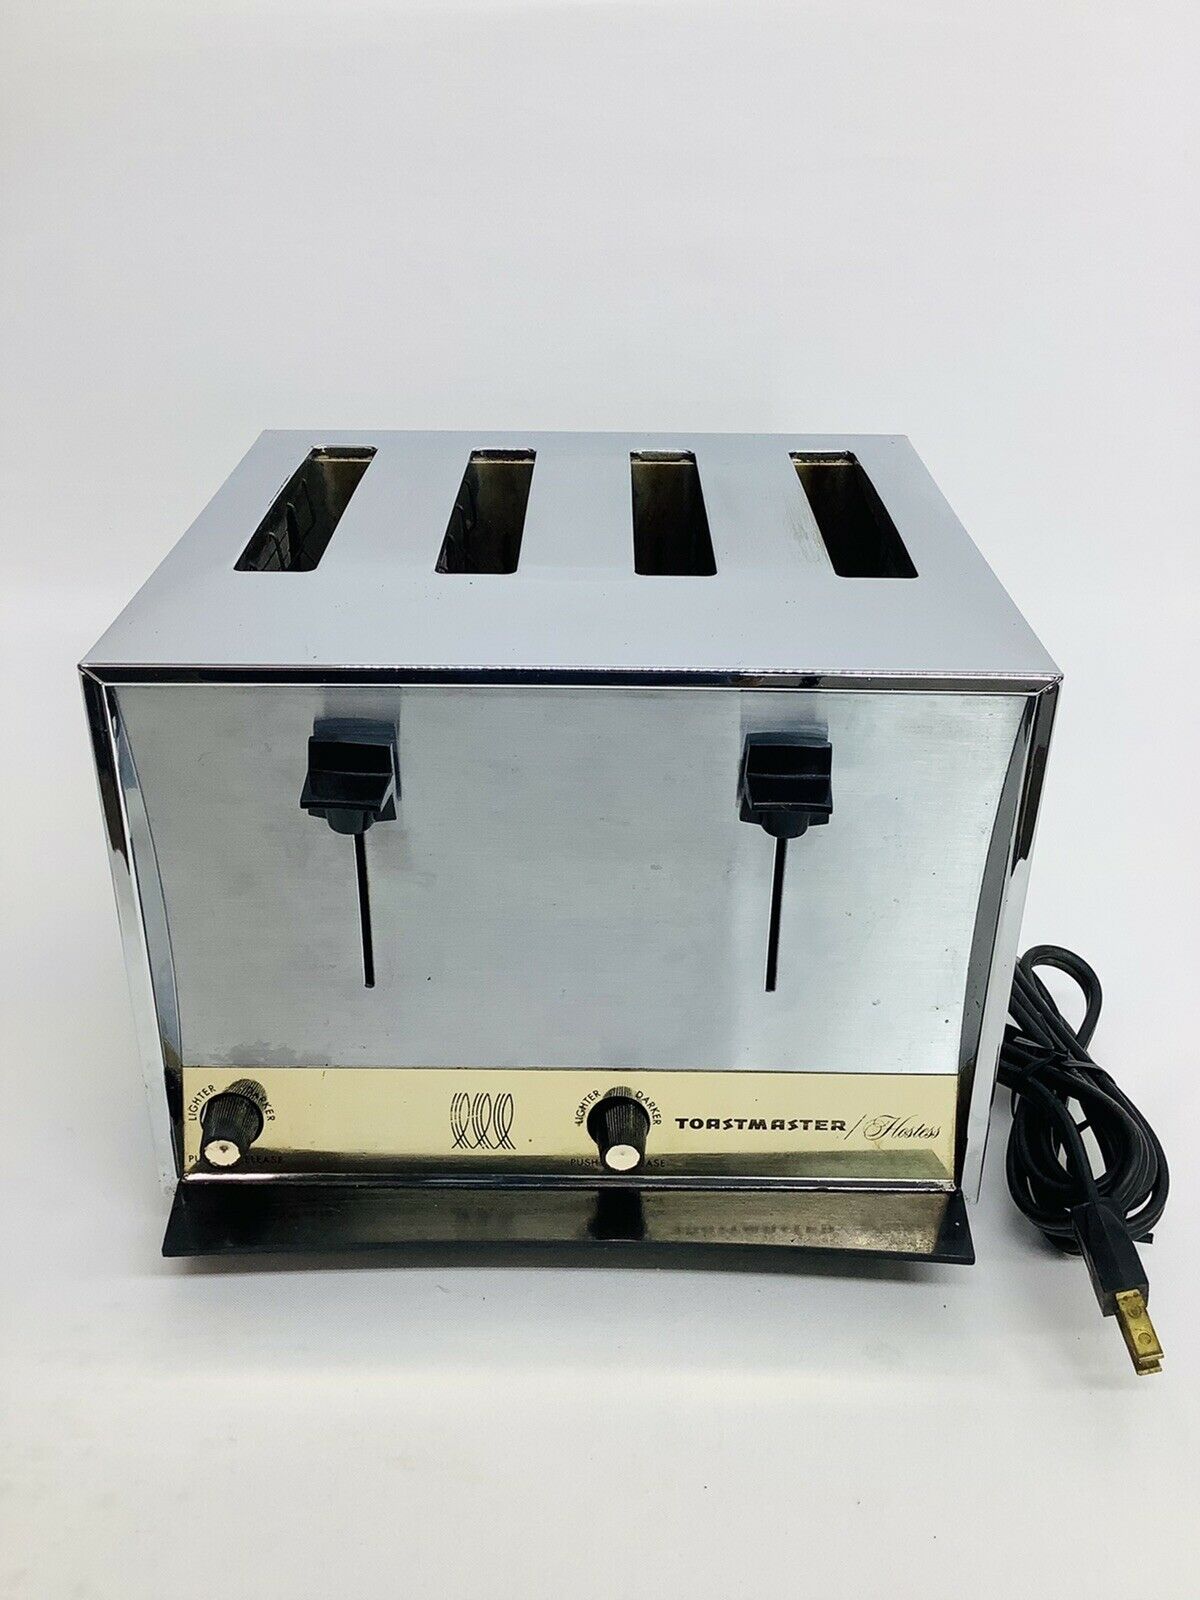 Vintage Toastmaster Hostess 4 Slot Toaster Model #d111-2 Stainless Steel